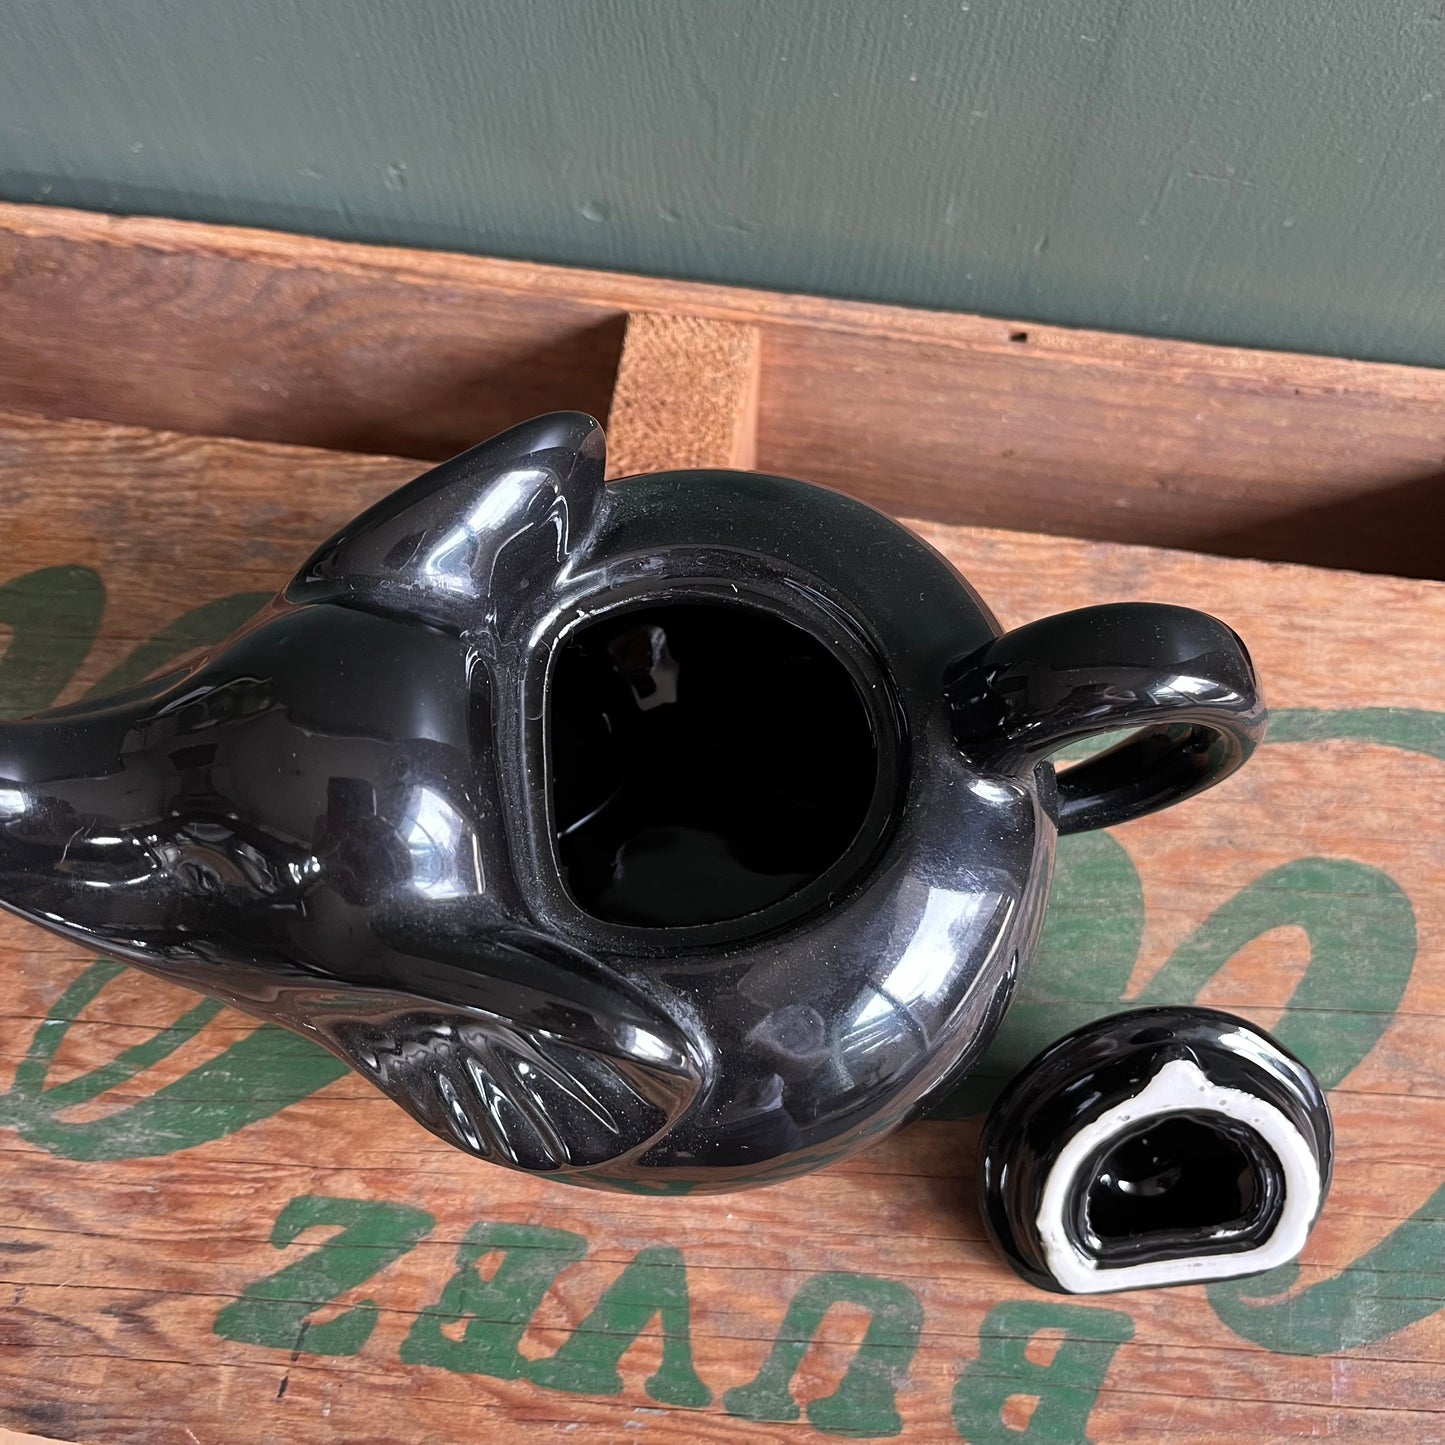 Vintage 70s Black Ceramic Elephant Teapot